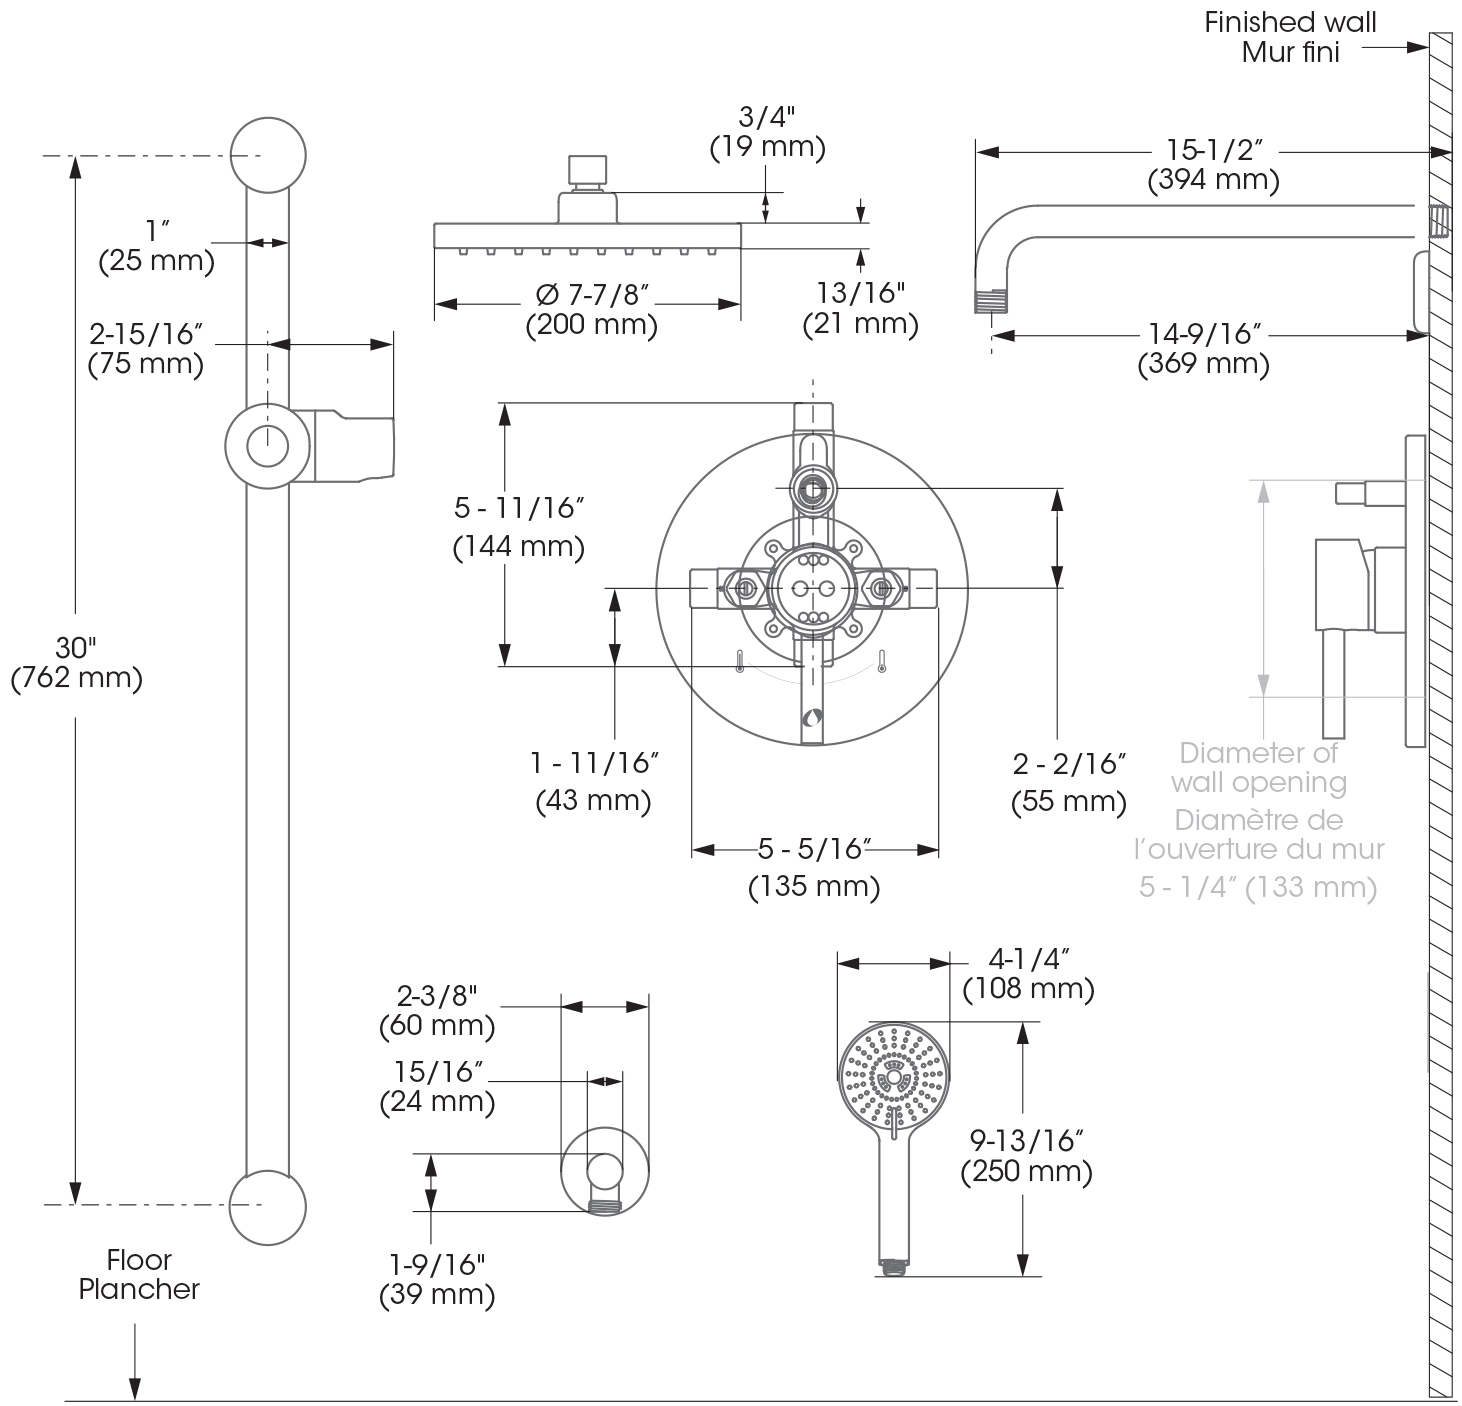 Shower Faucet Diagram Kit Shower Faucet Complete Model With Pressure Balanced Diverter